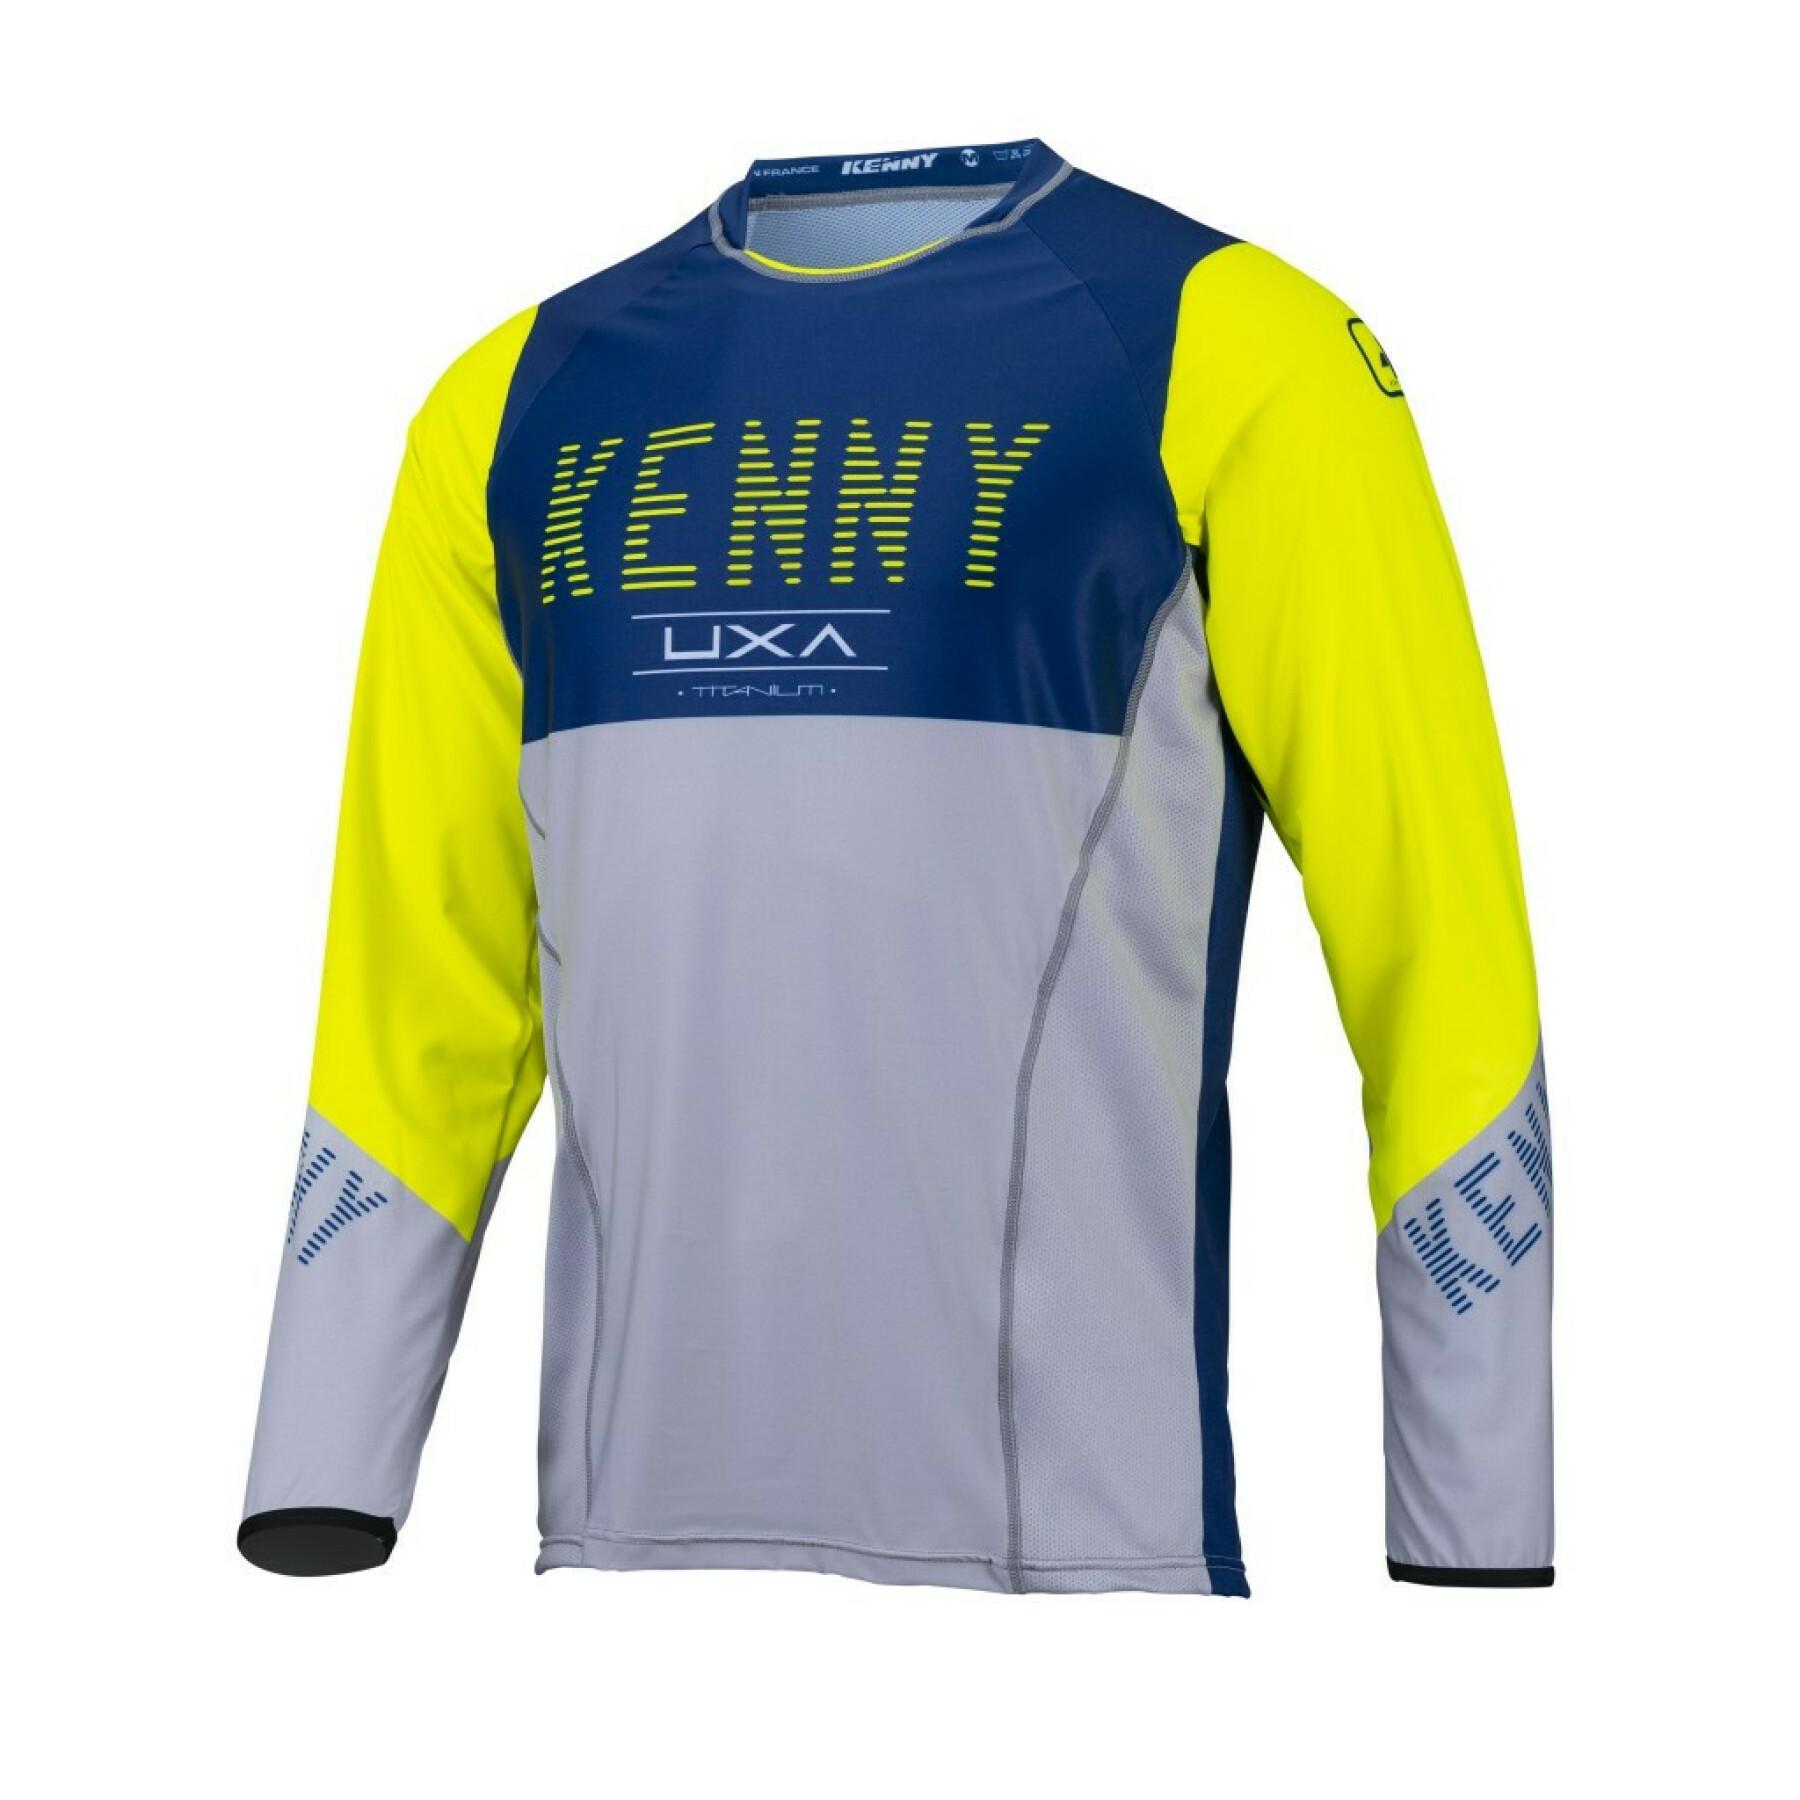 Motorcycle cross jersey Kenny titanium